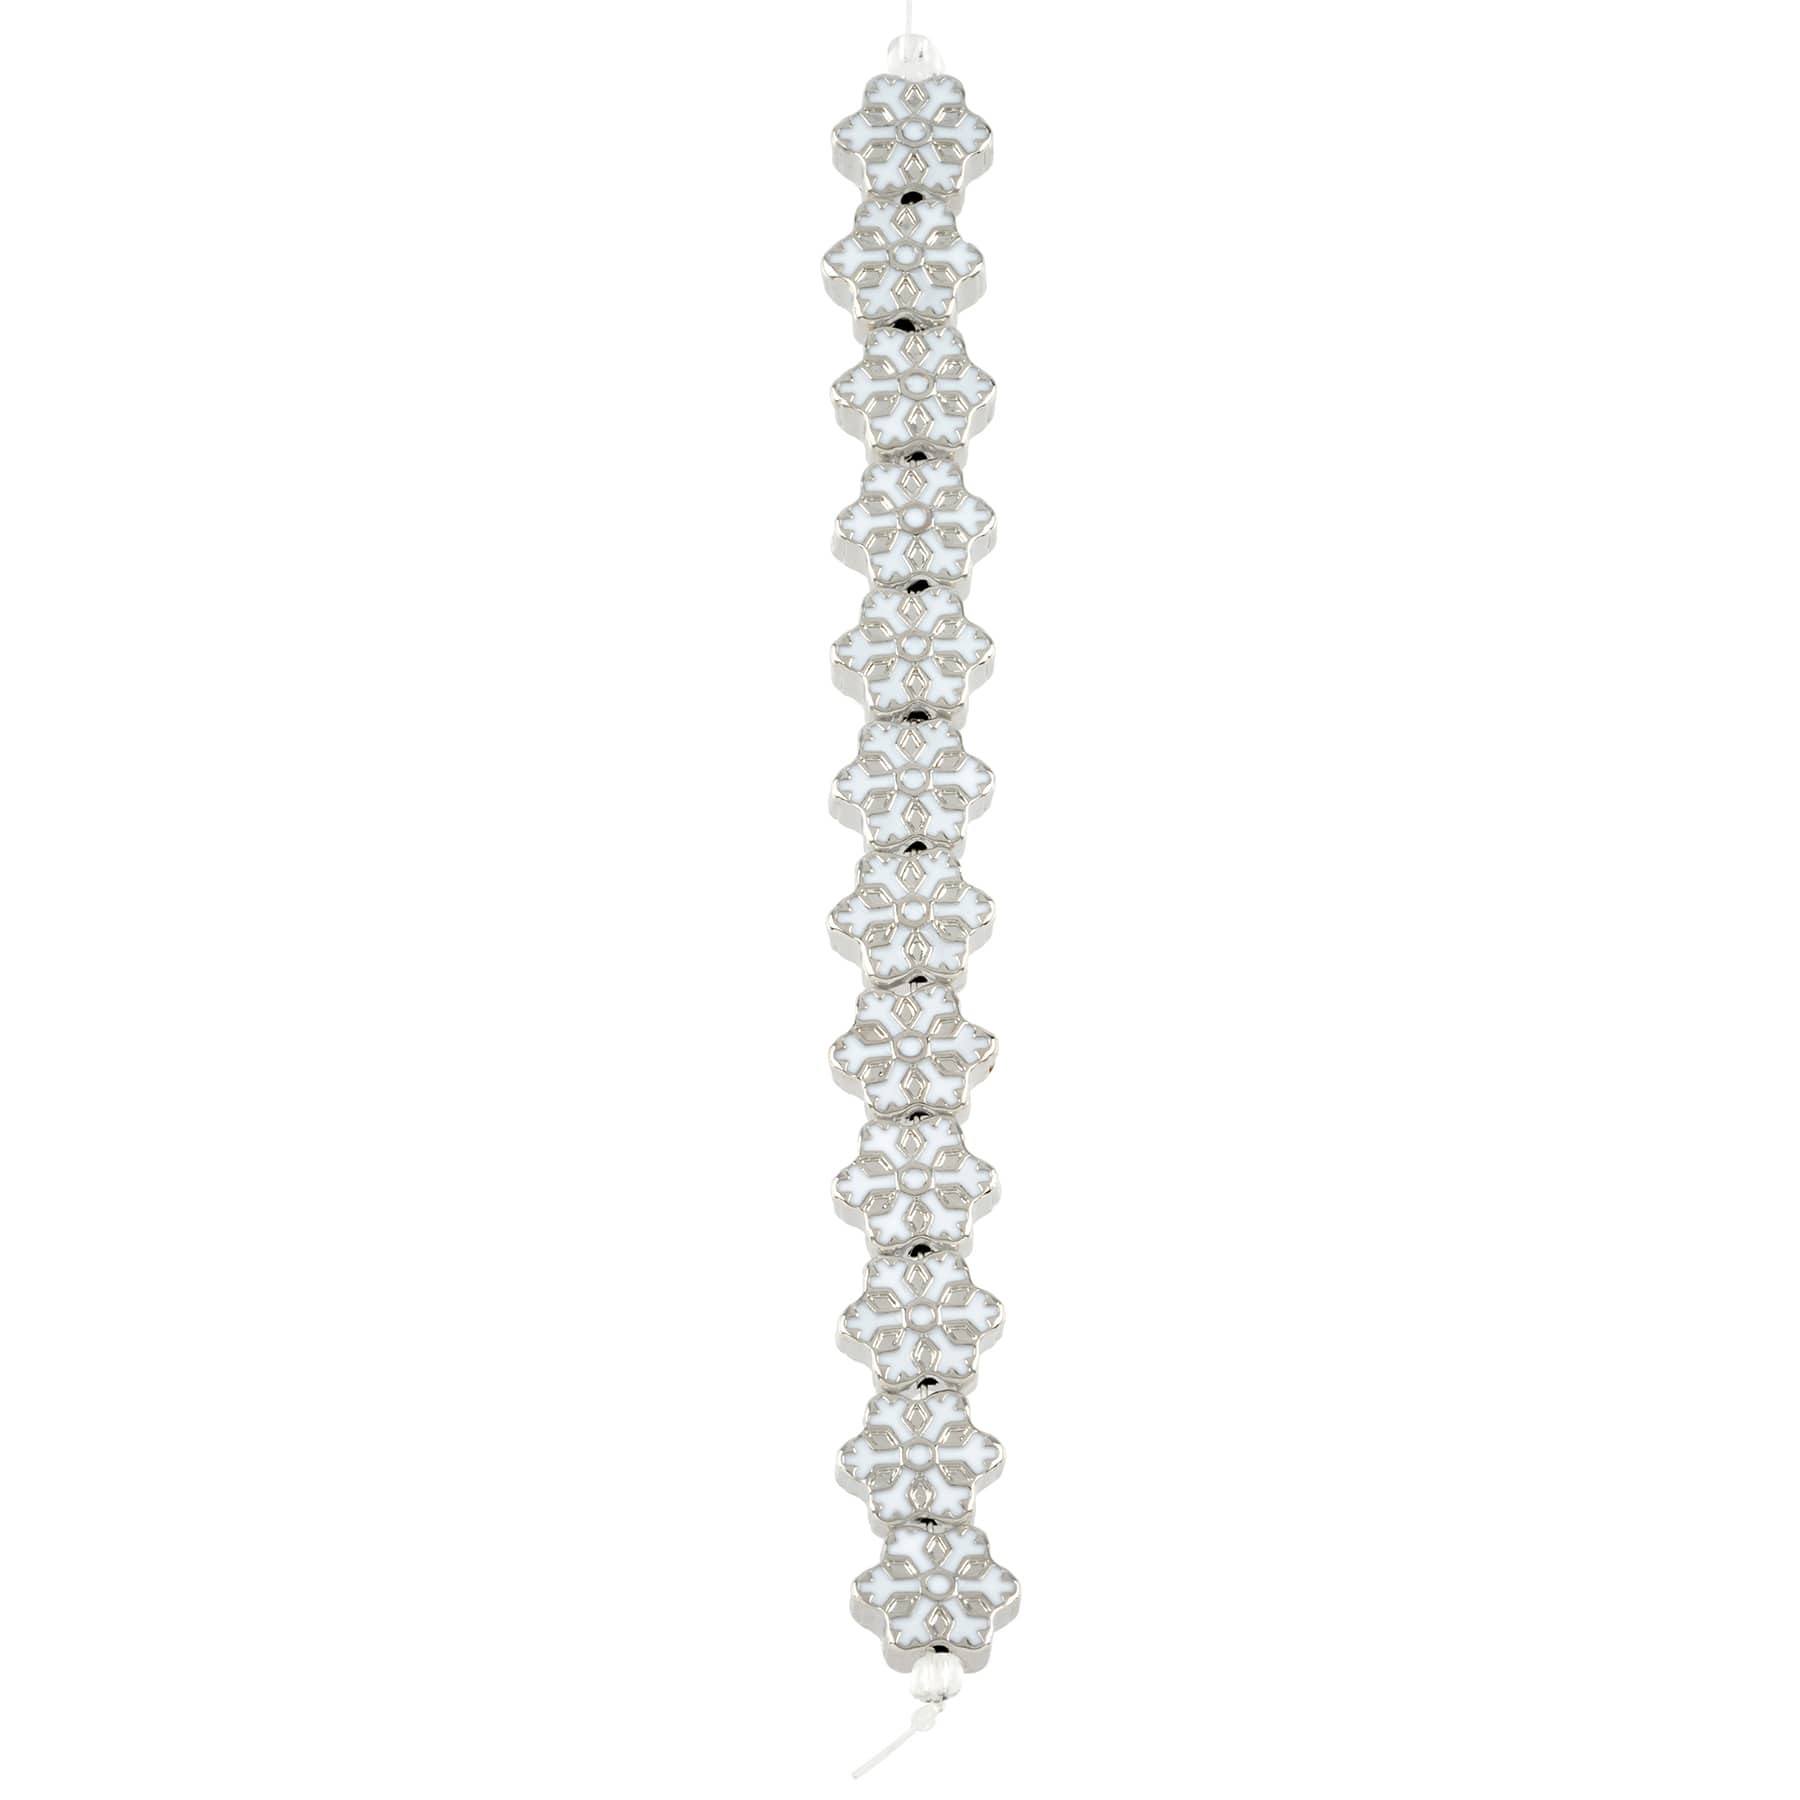 Rhodium & White Snowflake Beads, 12mm by Bead Landing™